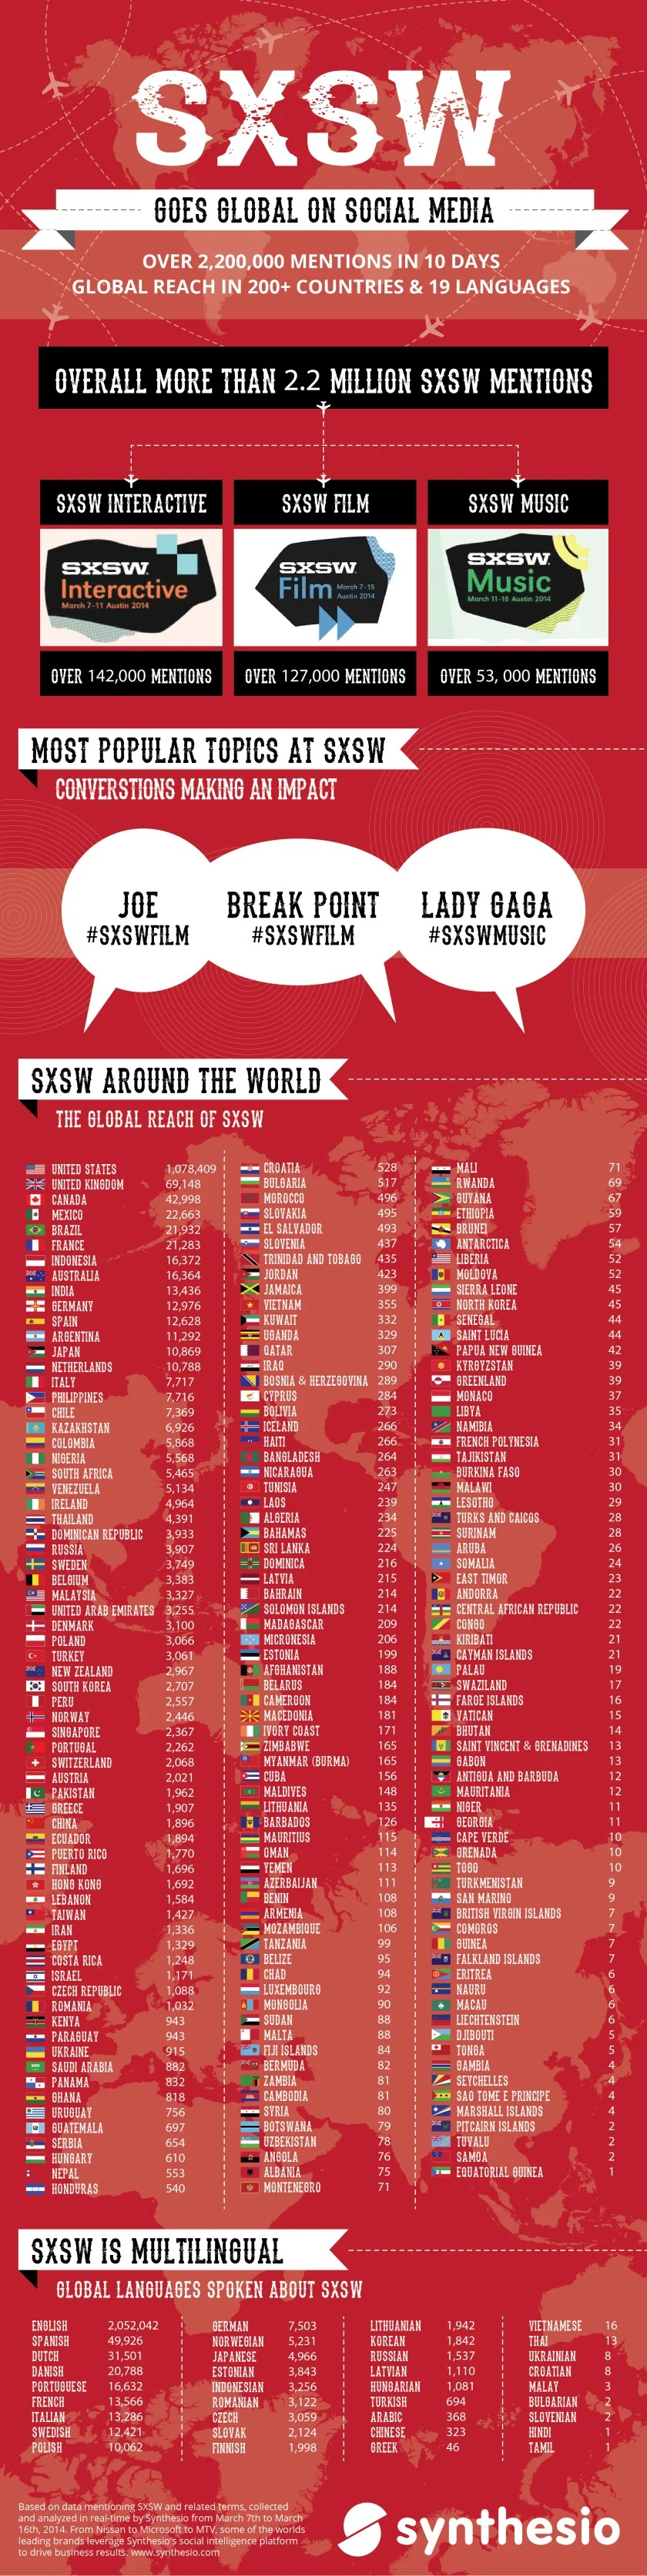 SXSW Goes Global on Social Media - infographic